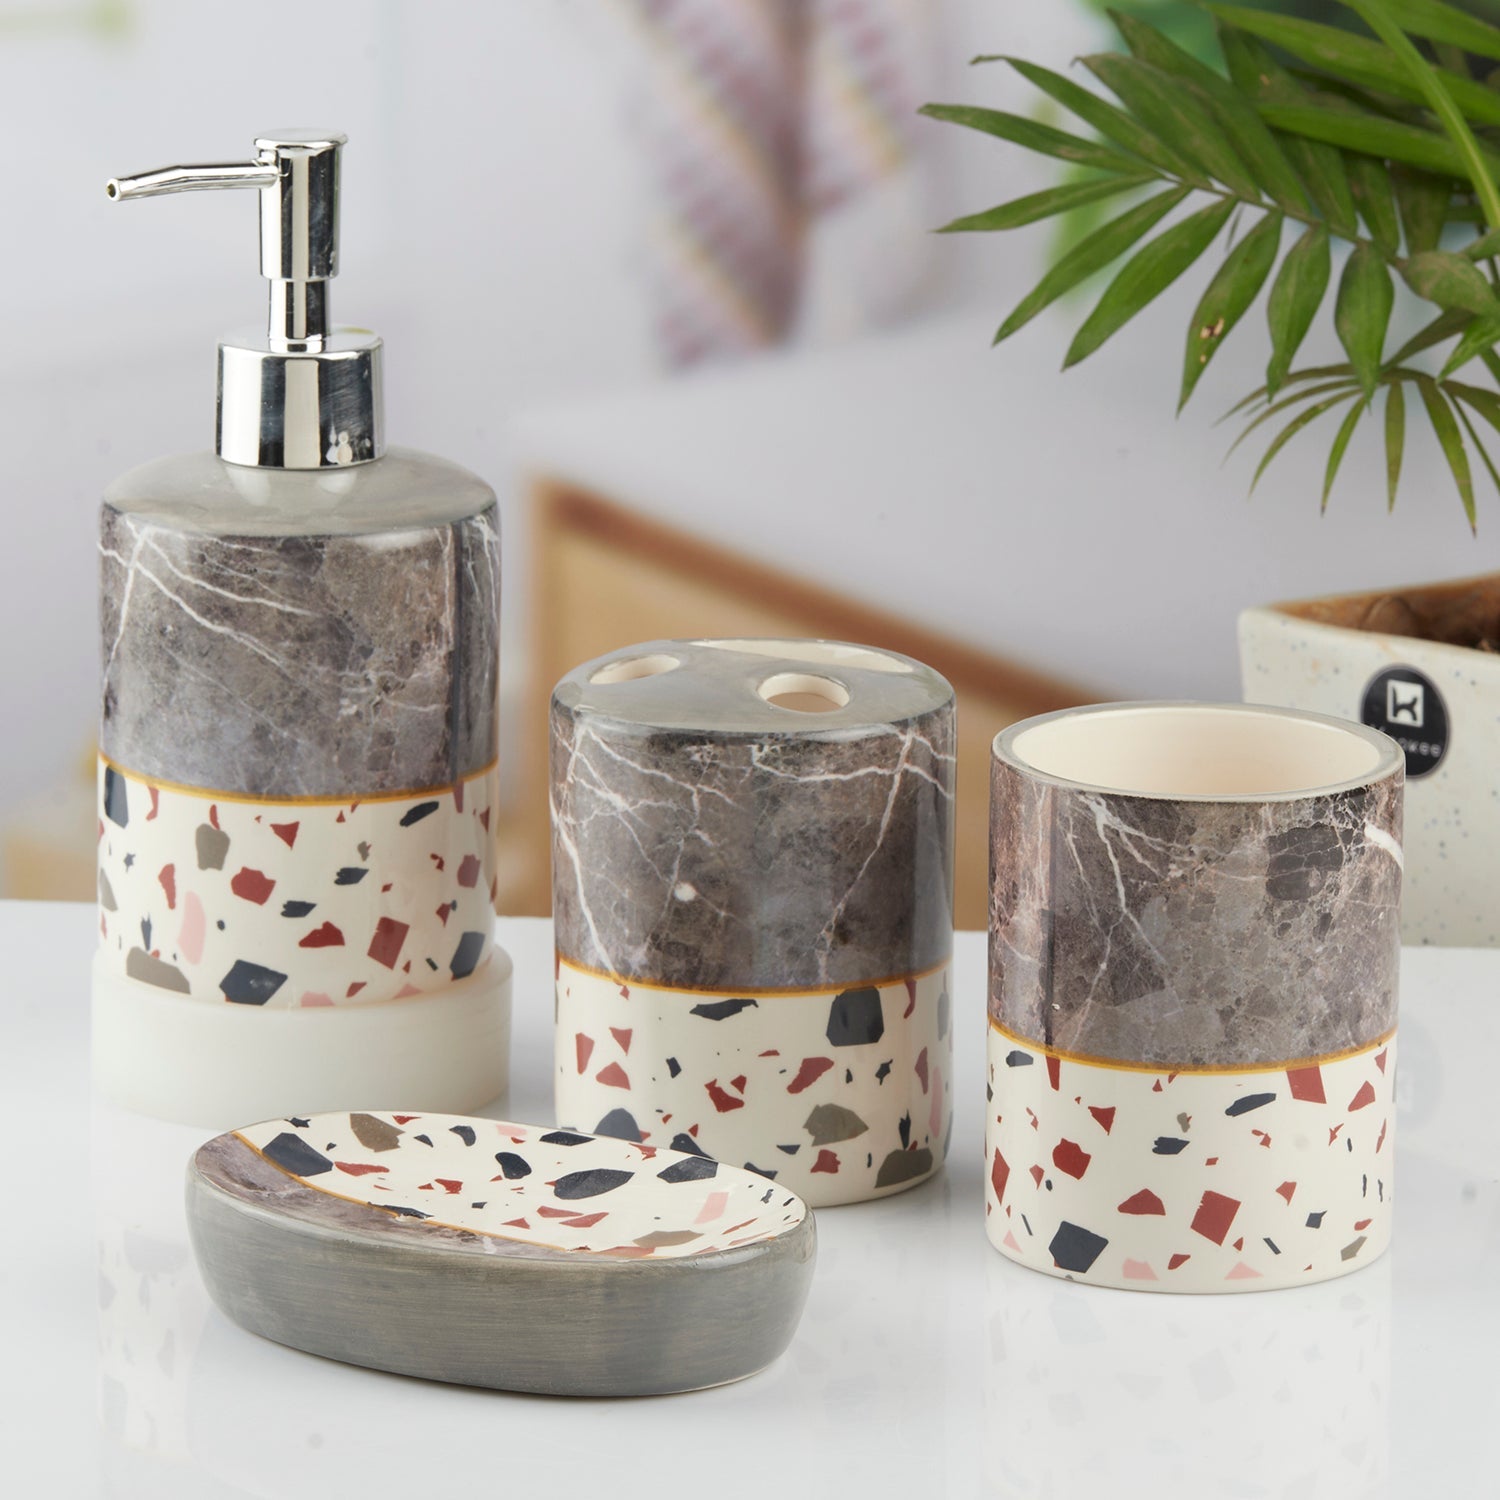 Ceramic Bathroom Set of 4 with Soap Dispenser (10471)